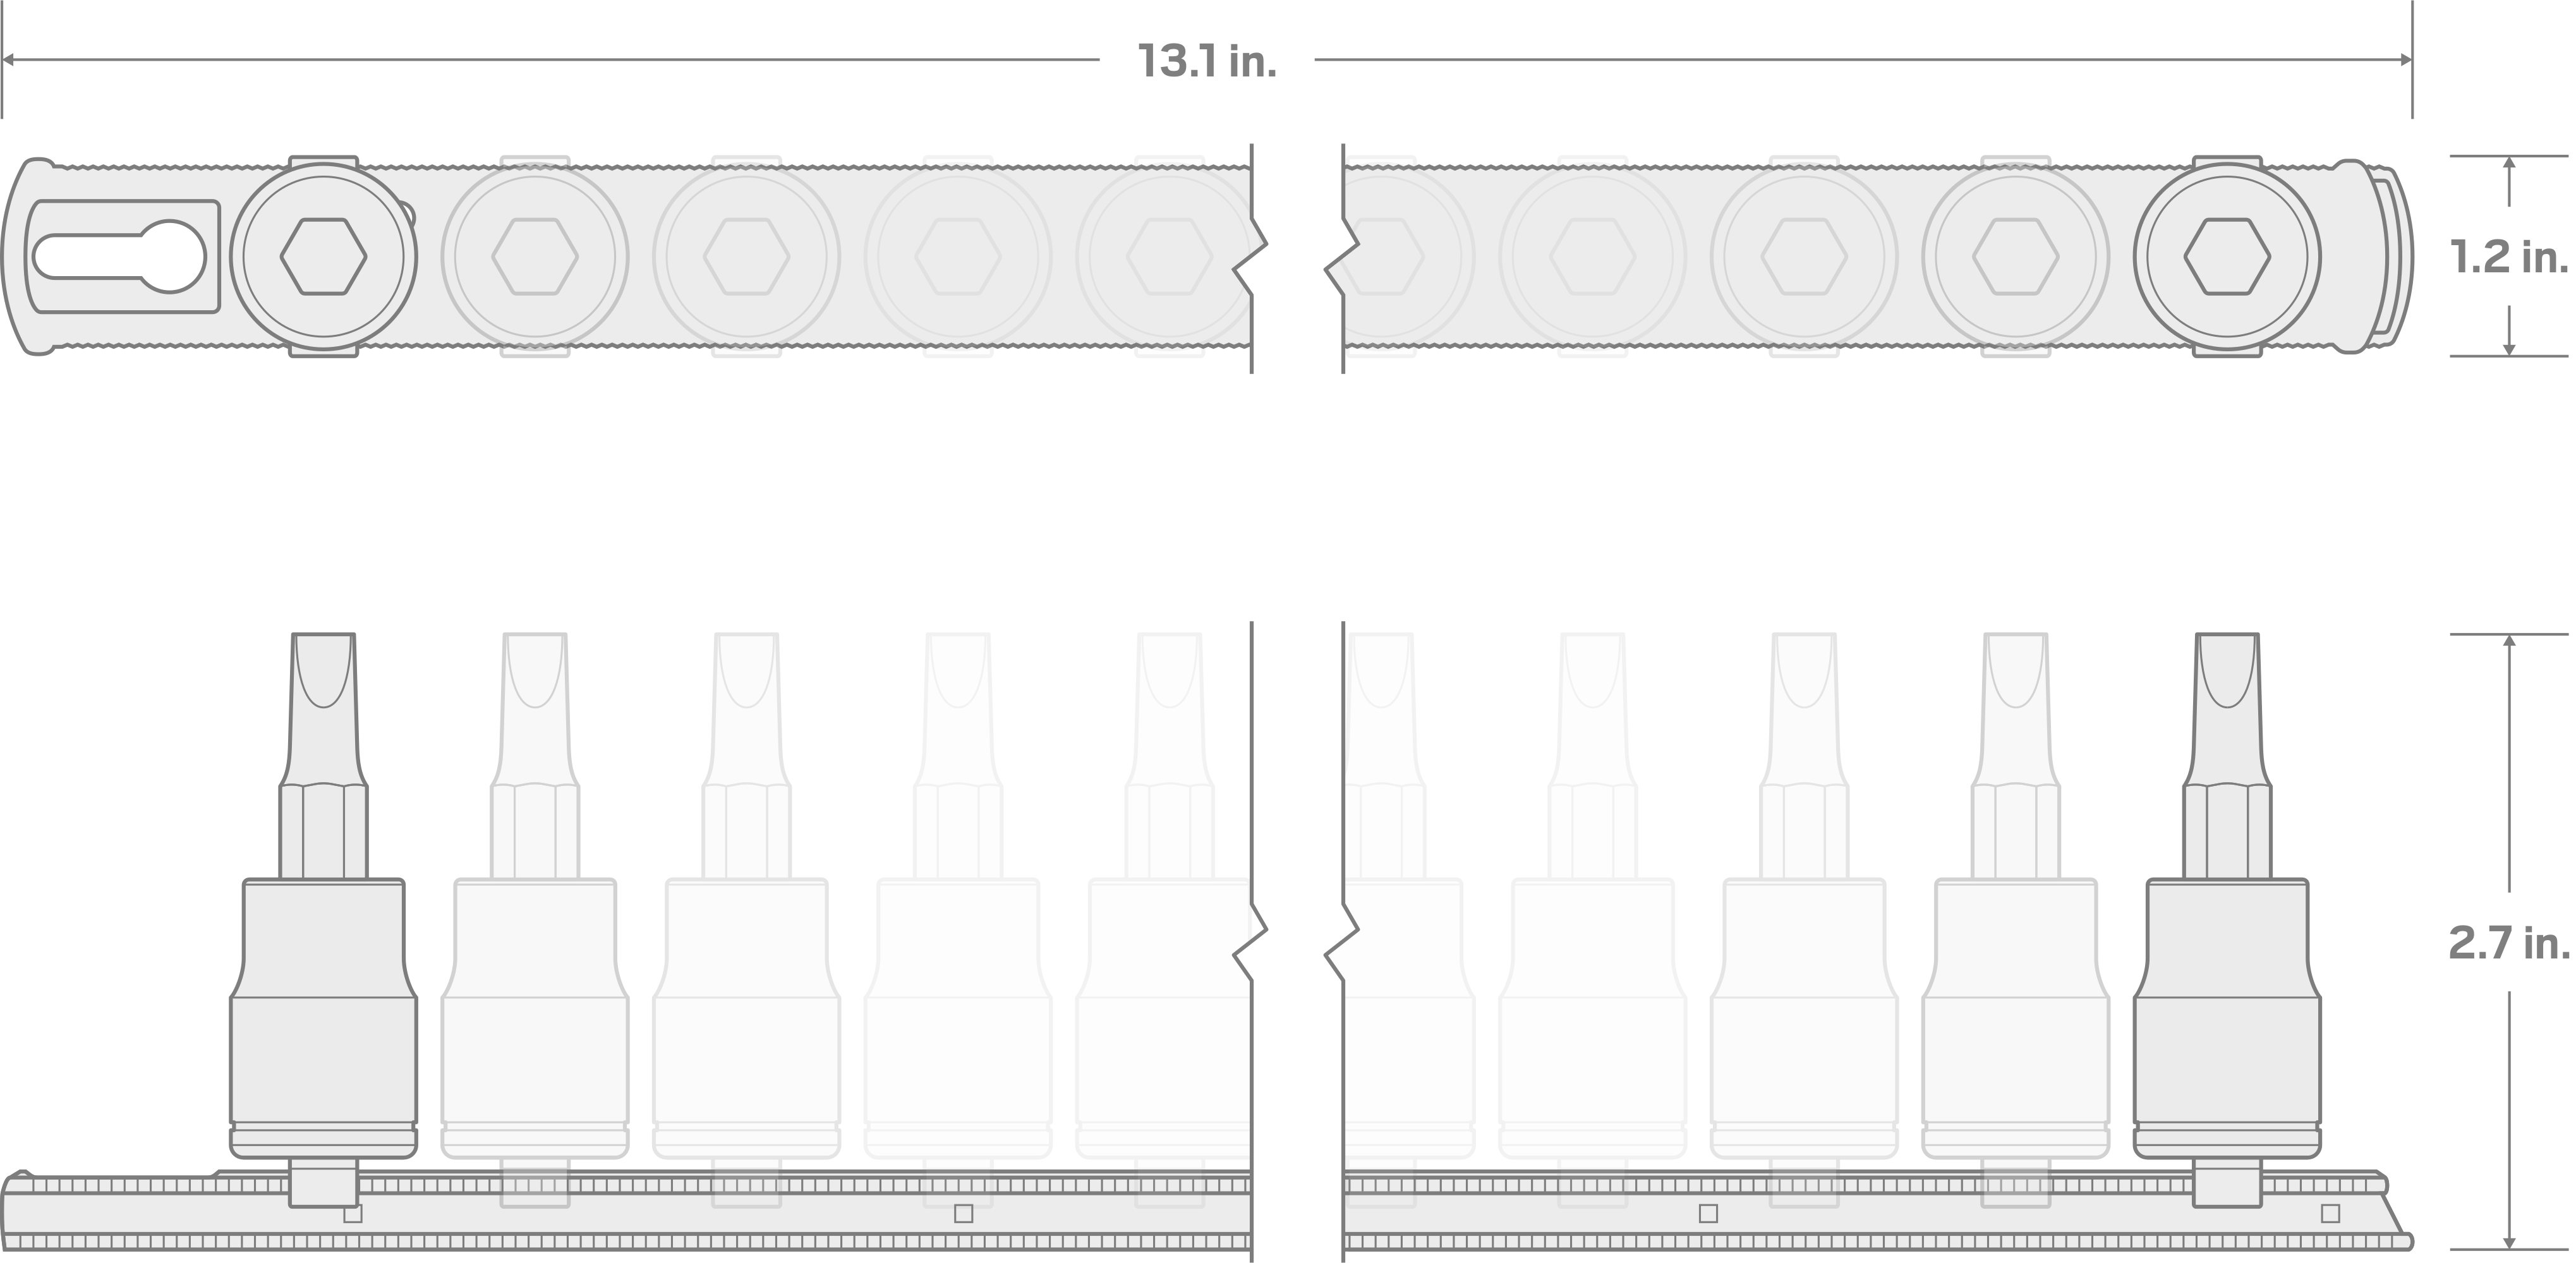 Specs for 1/2 Inch Drive Torx Bit Socket Set with Rail, 10-Piece (T20-T60)